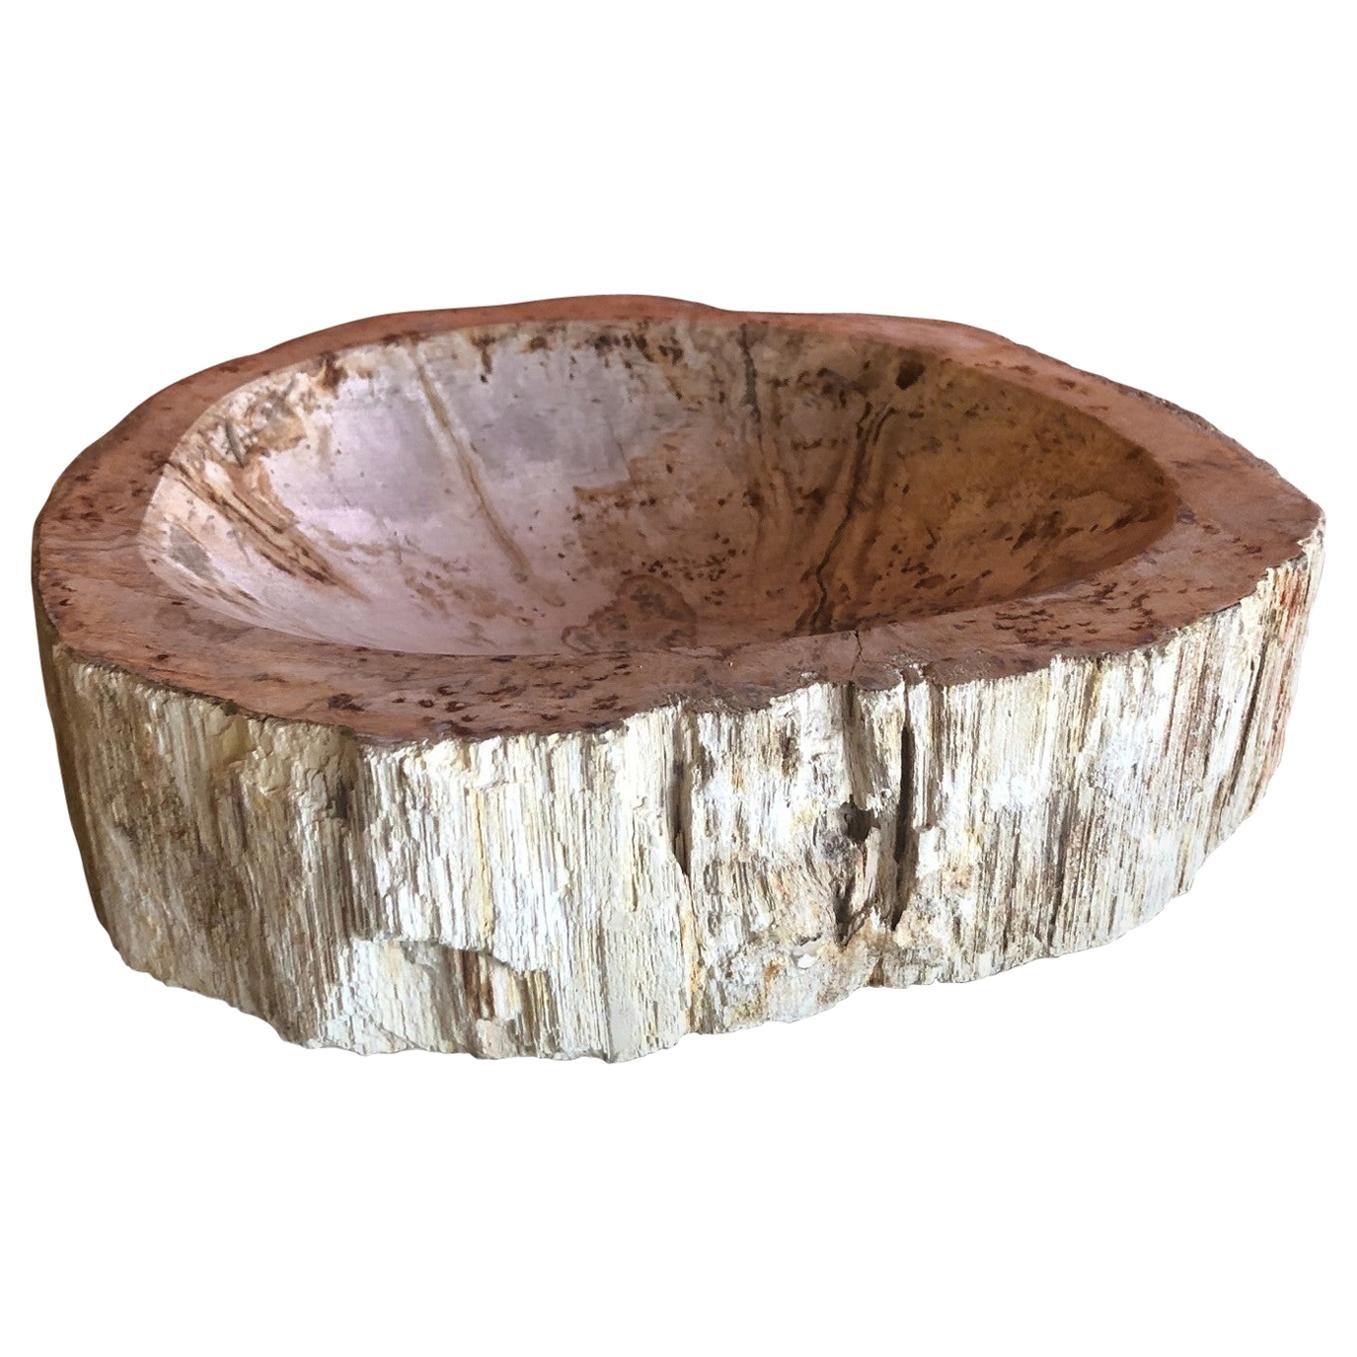 1950s Petrified Wood Bowl / Ashtray